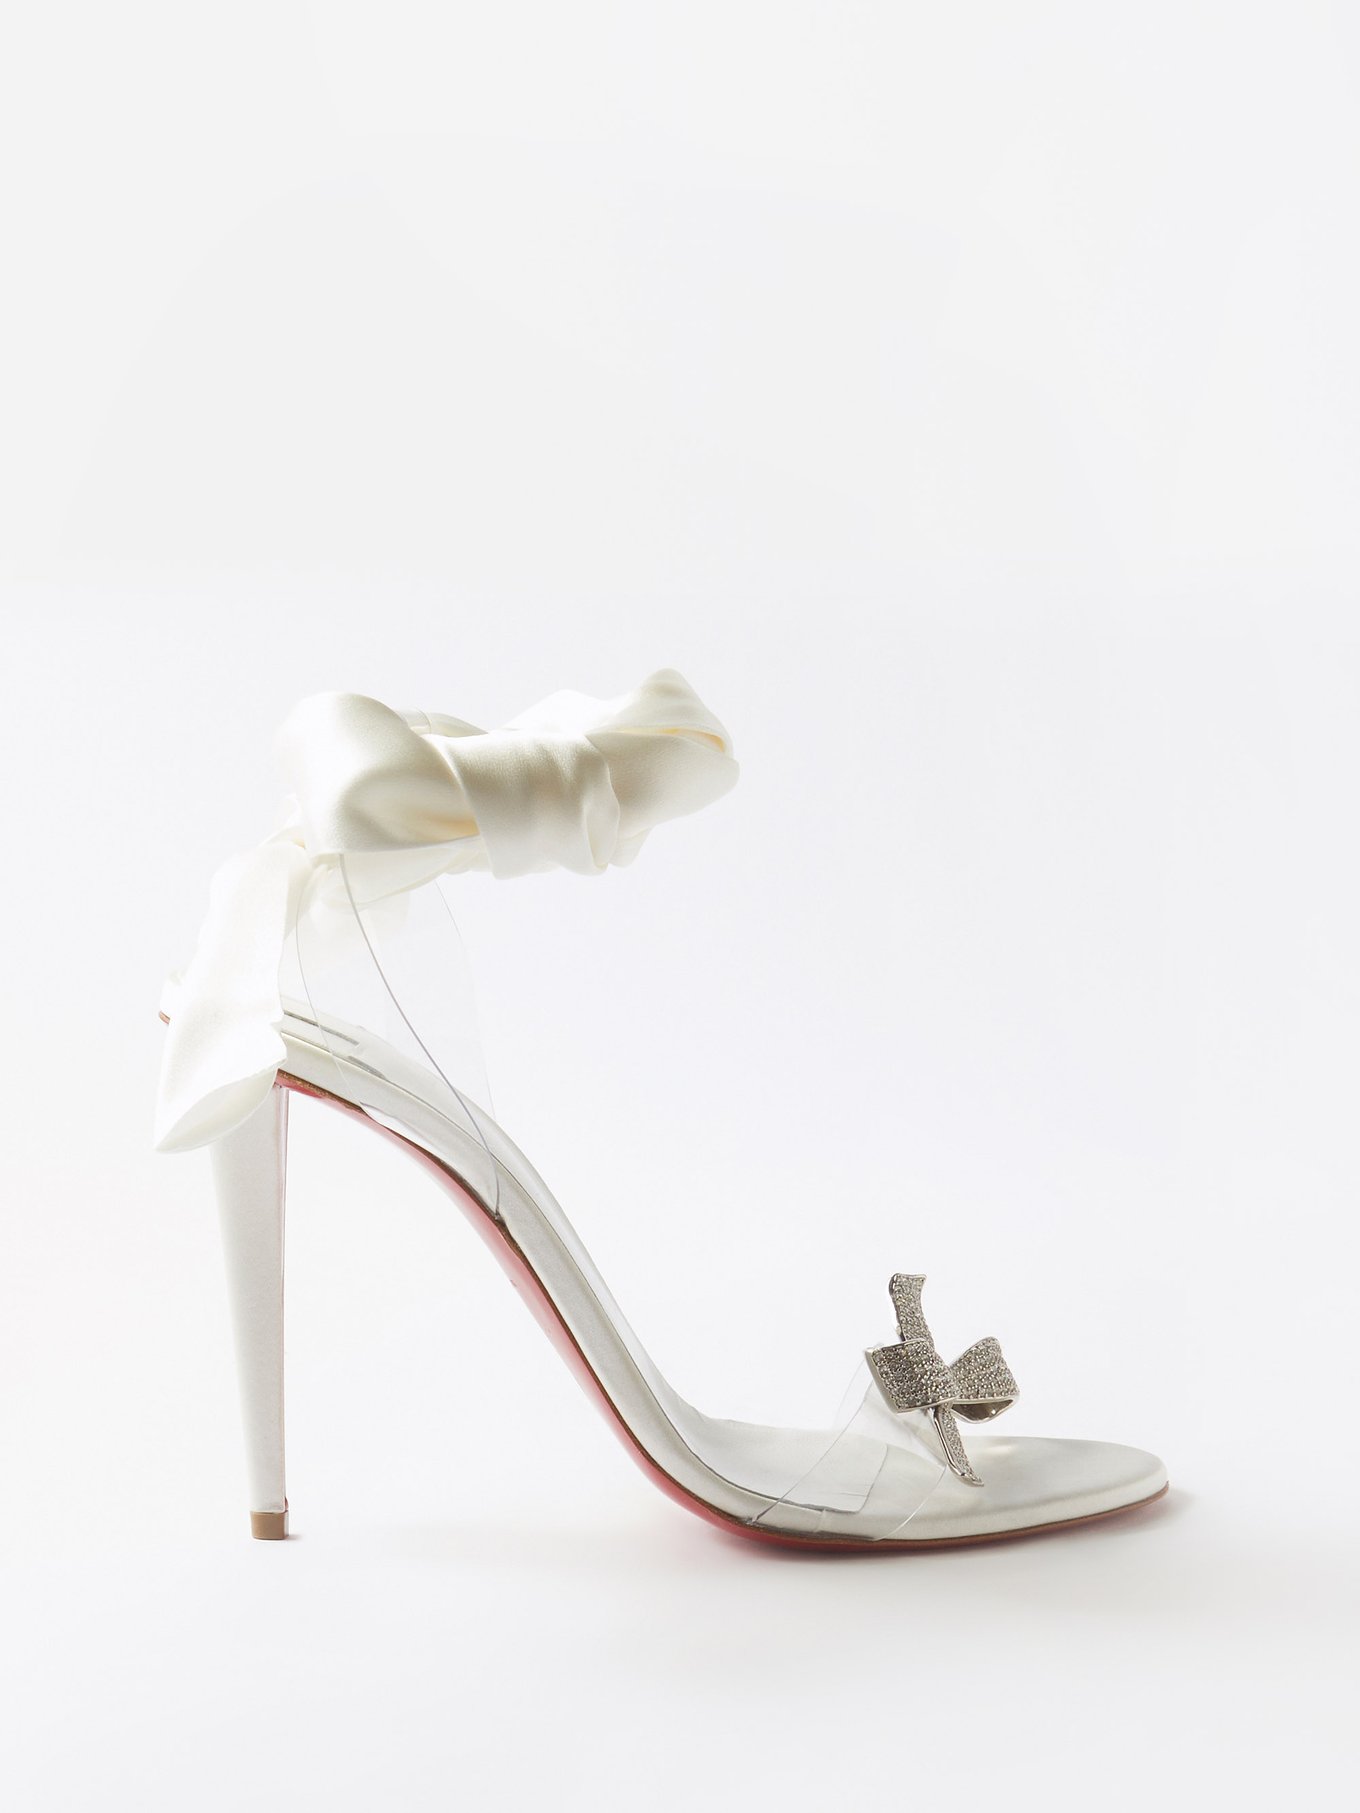 christian louboutin white wedding shoes, mens christian louboutin loafers